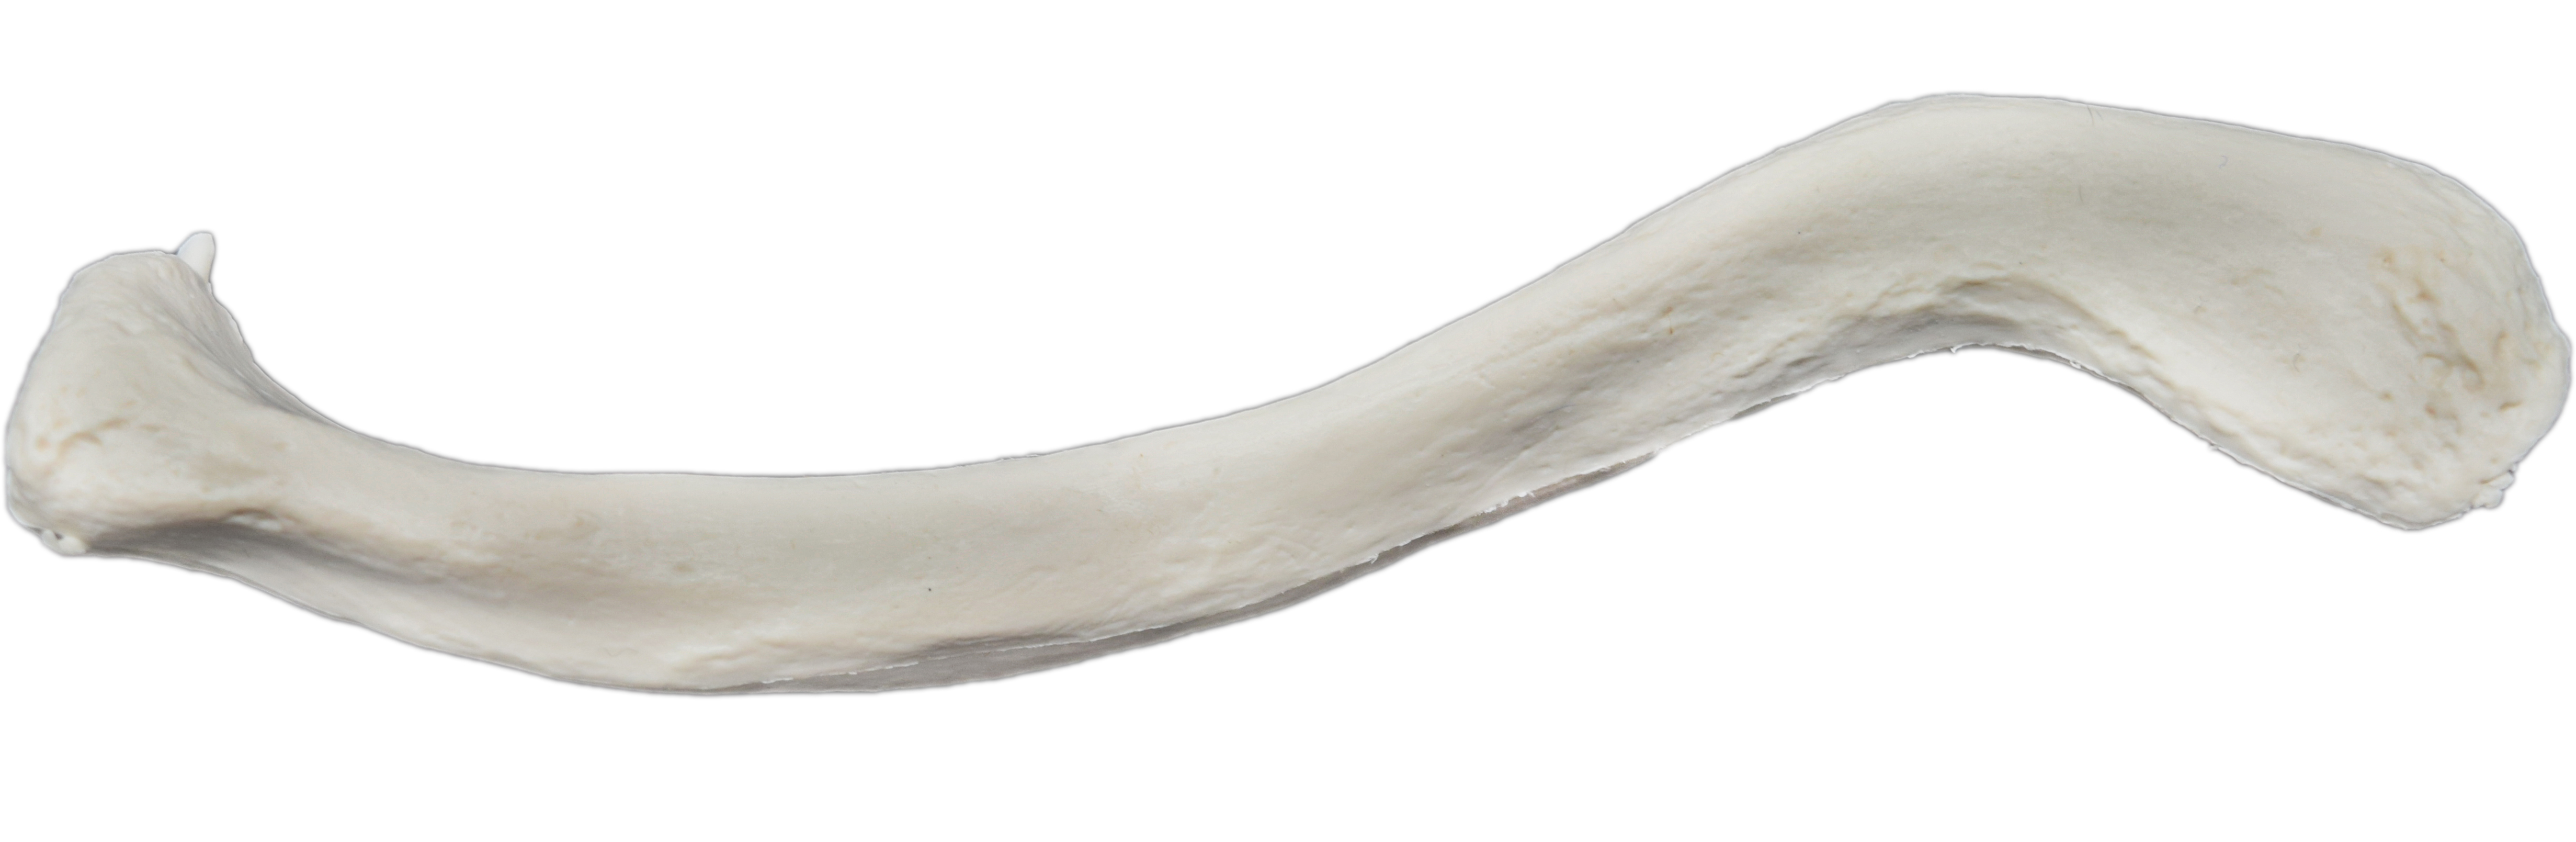 Clavicle Bone - L - Anatomically Accurate, Detailed Human Bone Replica